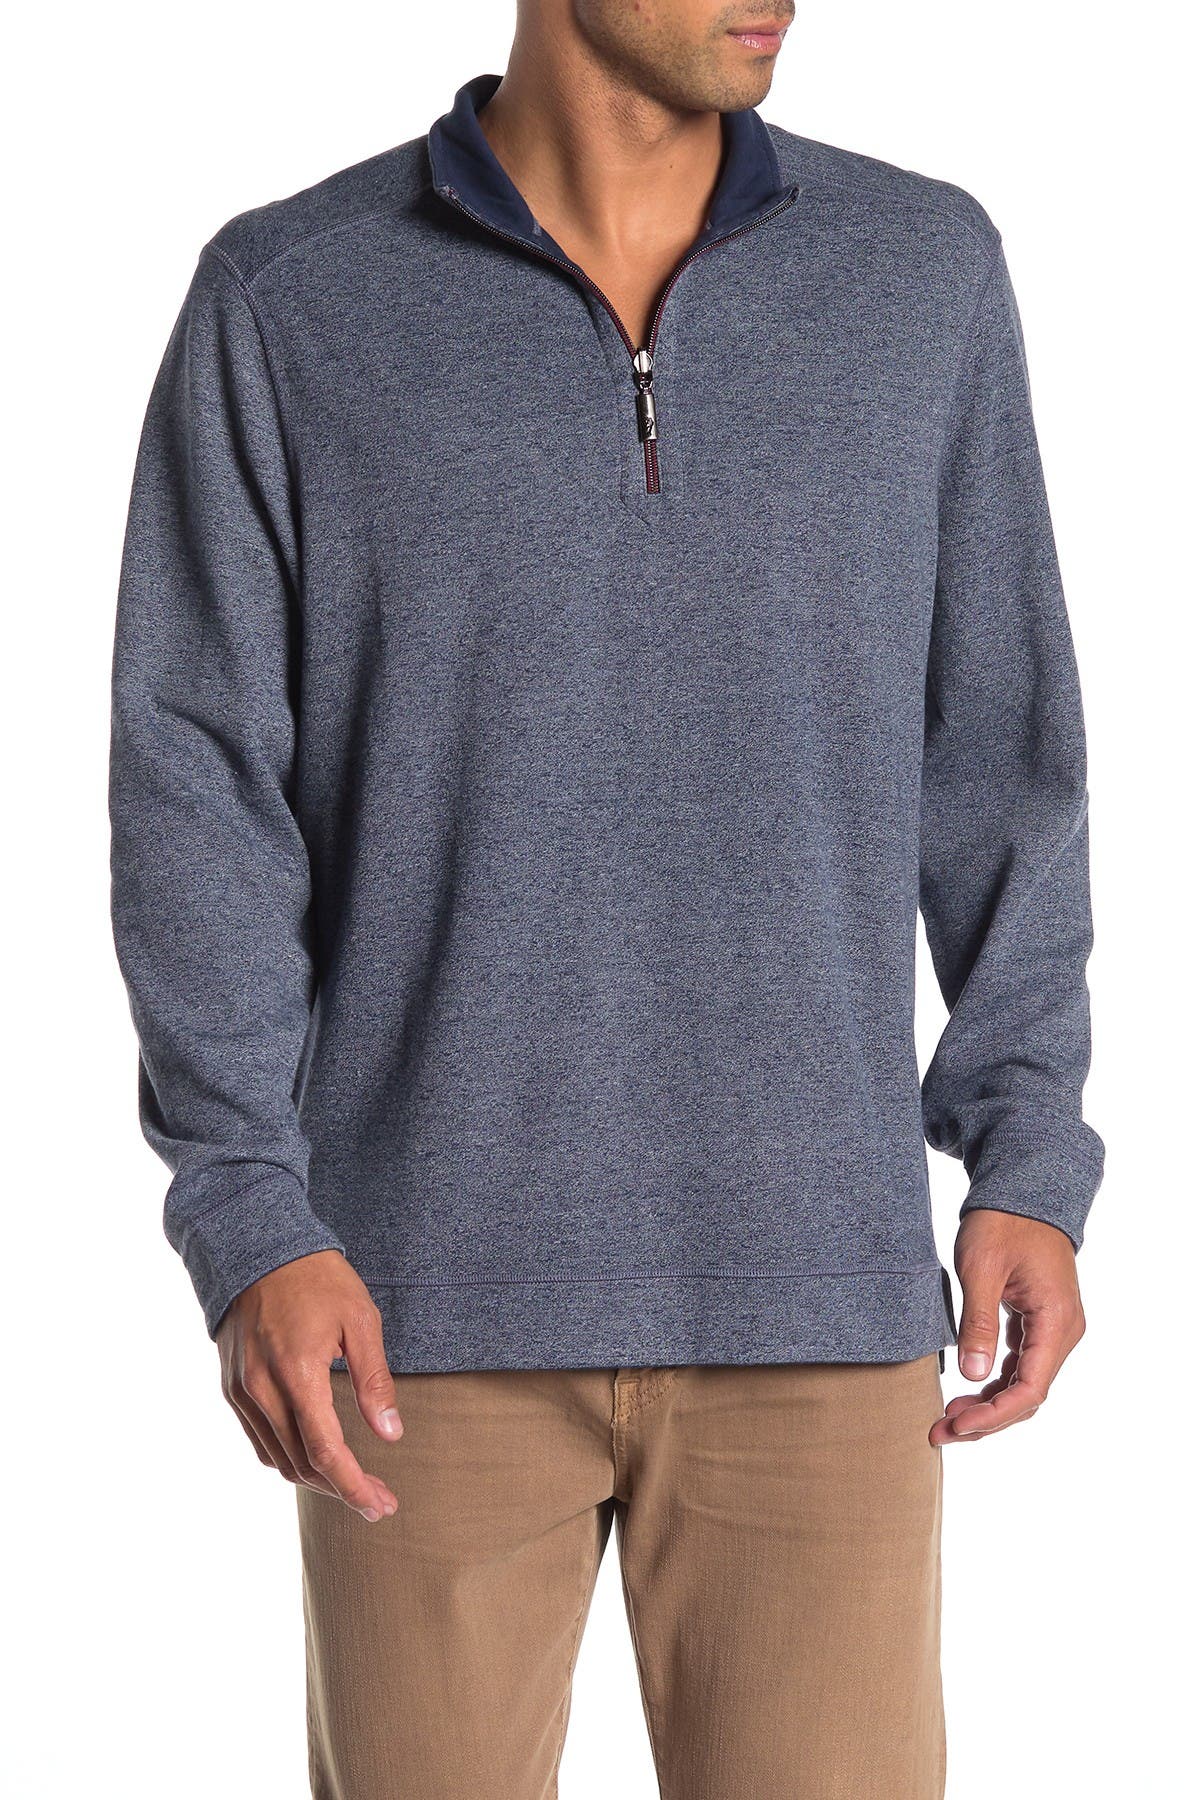 tommy bahama half zip sweater